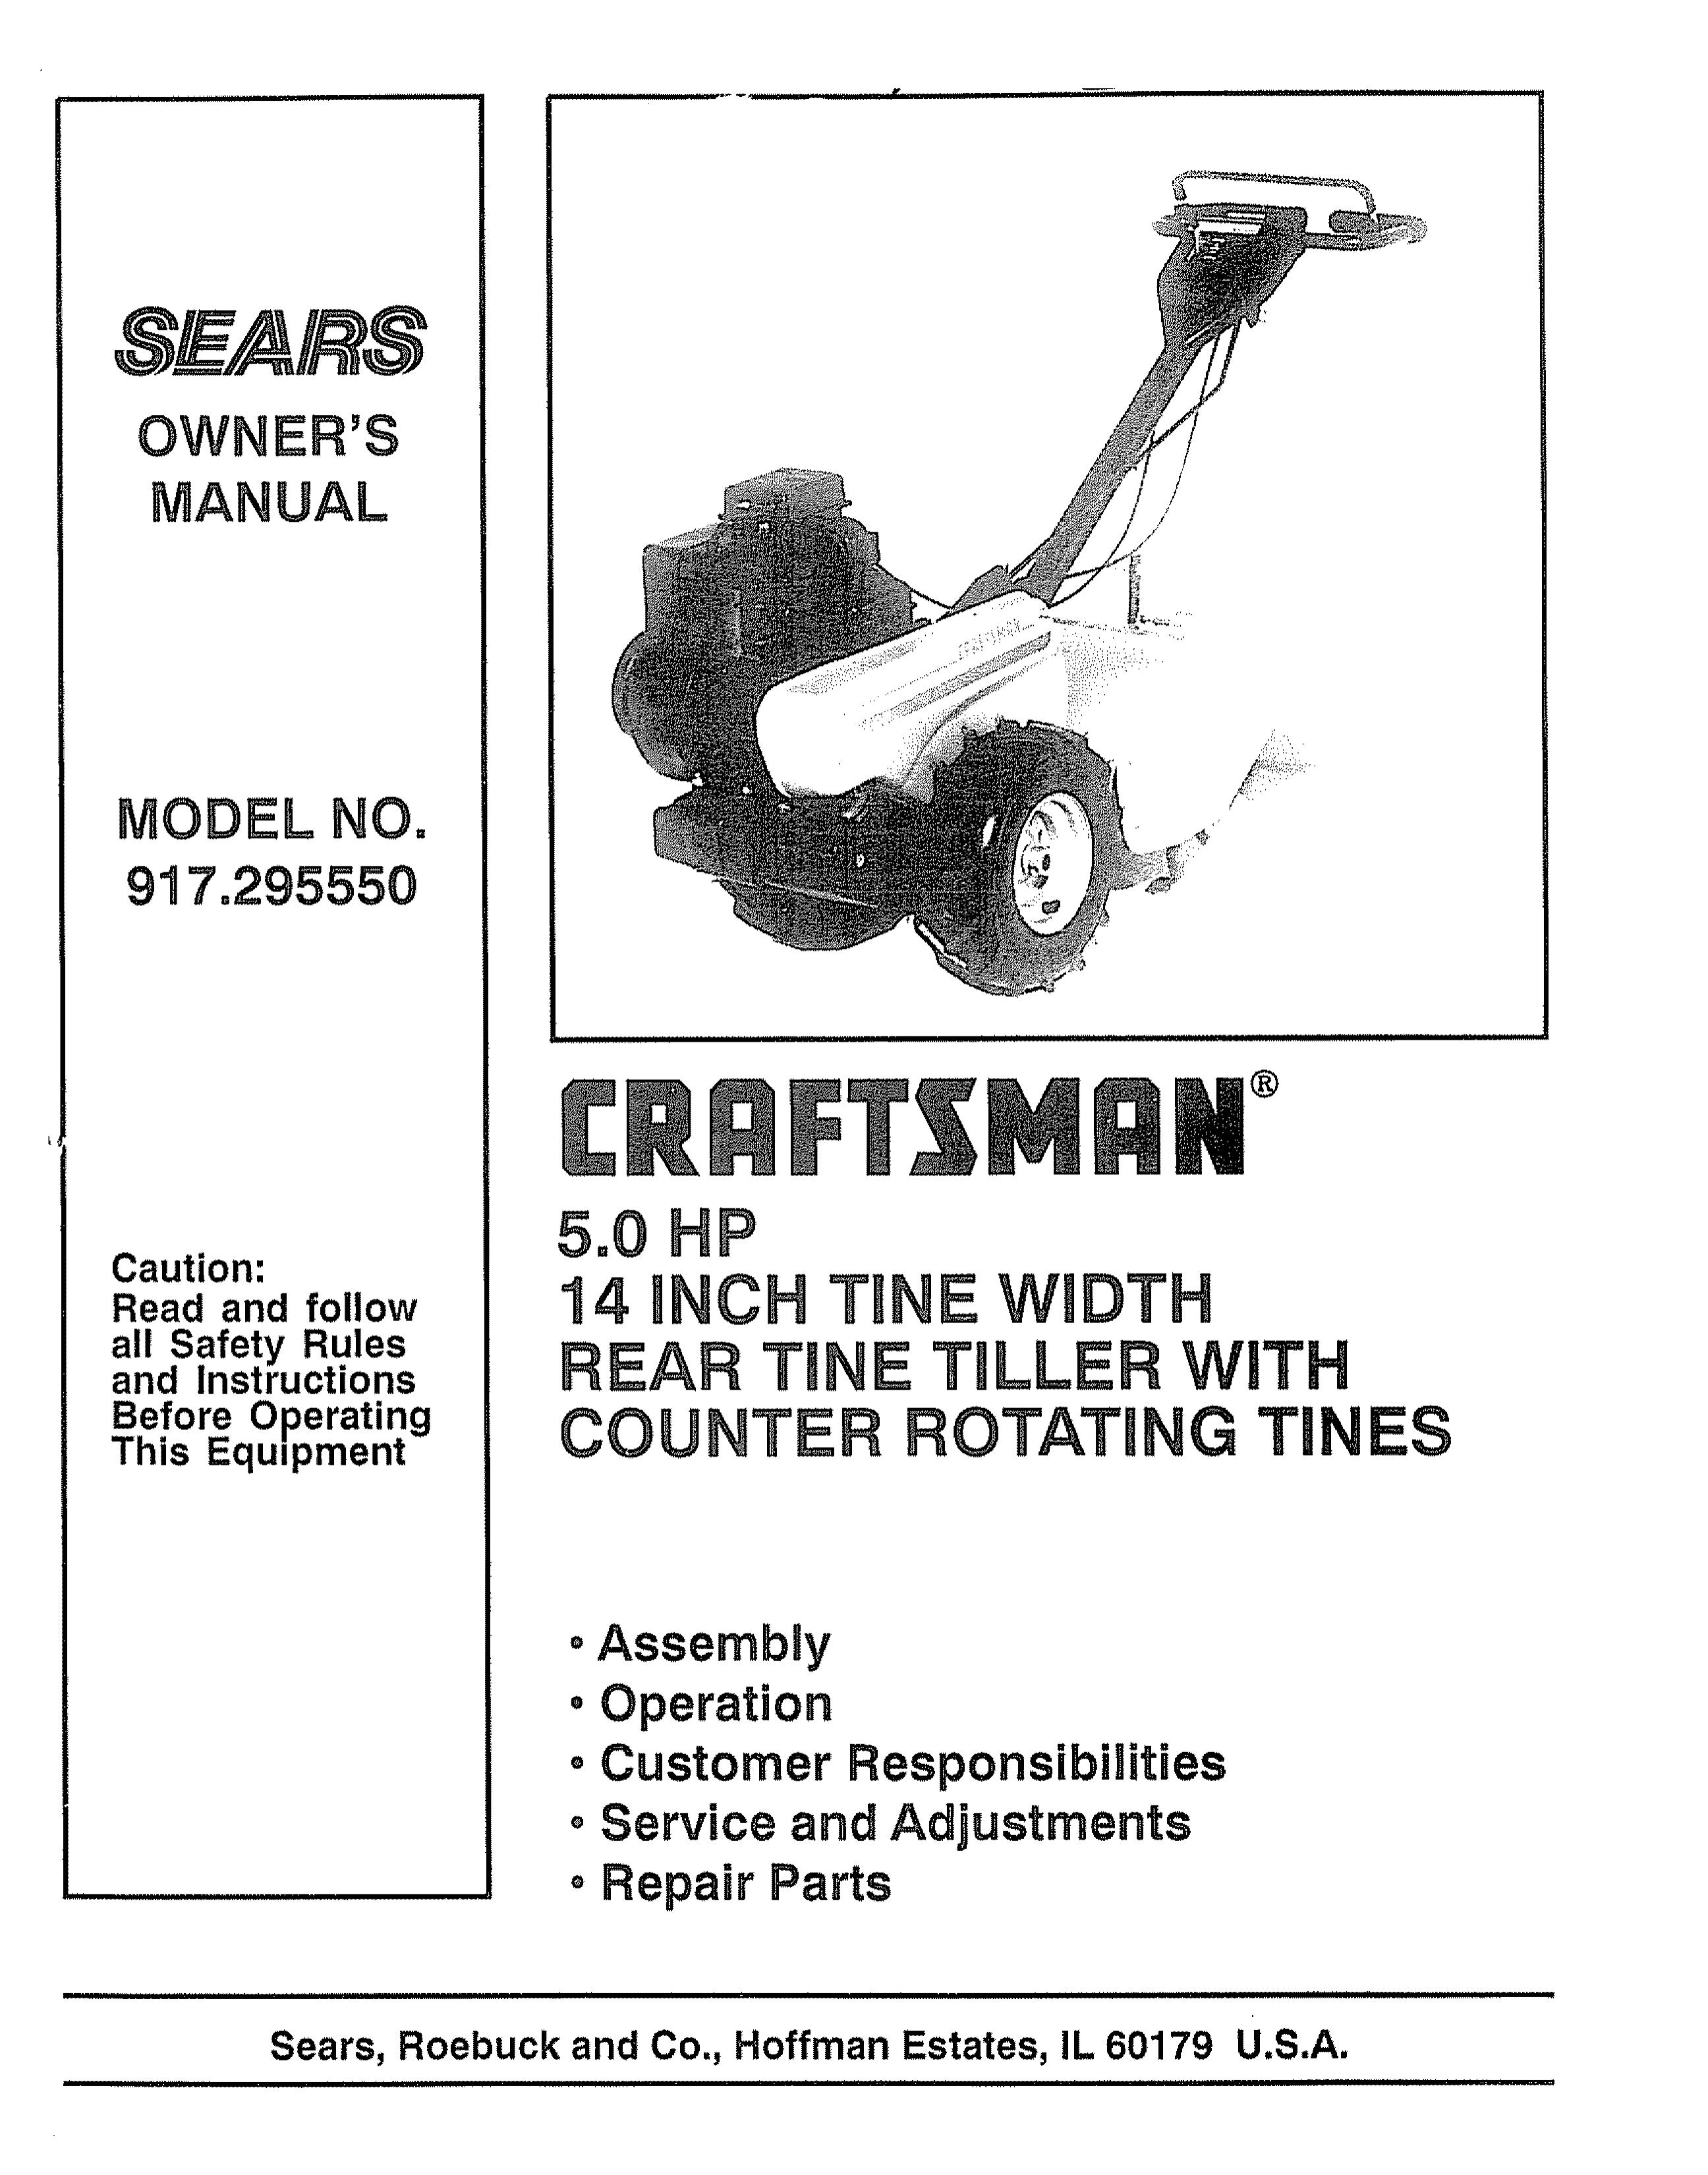 Craftsman 917.29555 Tiller User Manual